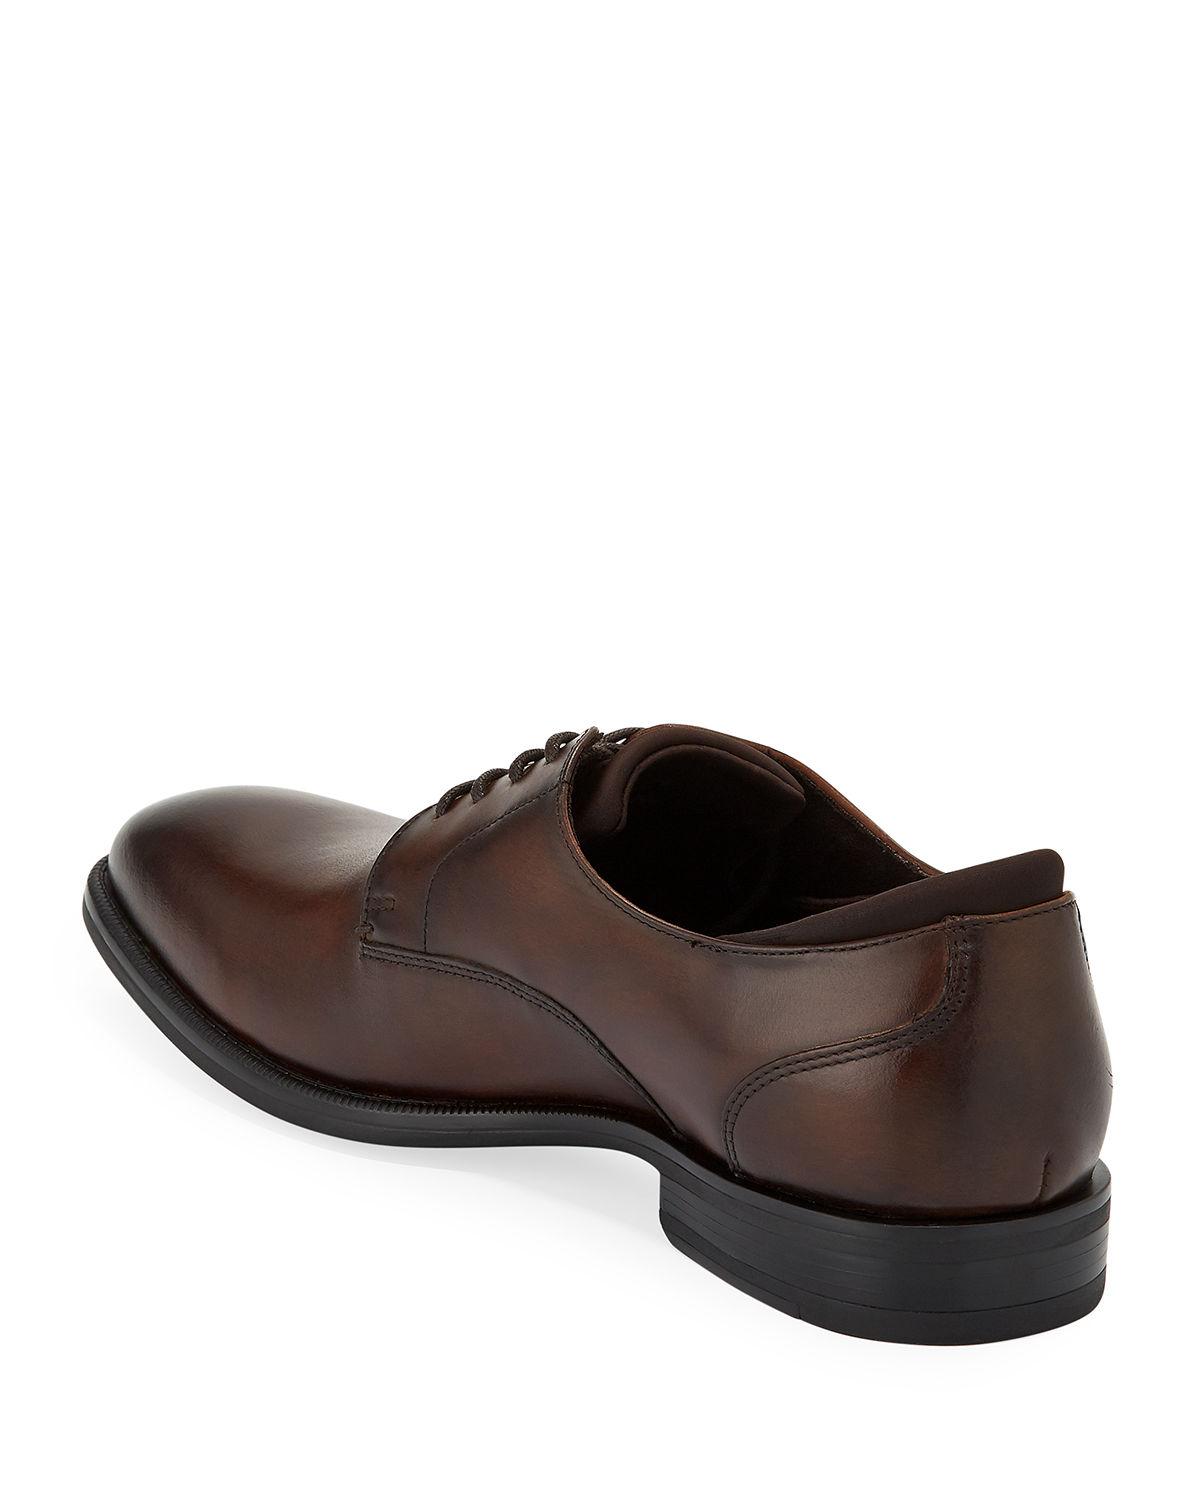 oxford black dress shoes for men